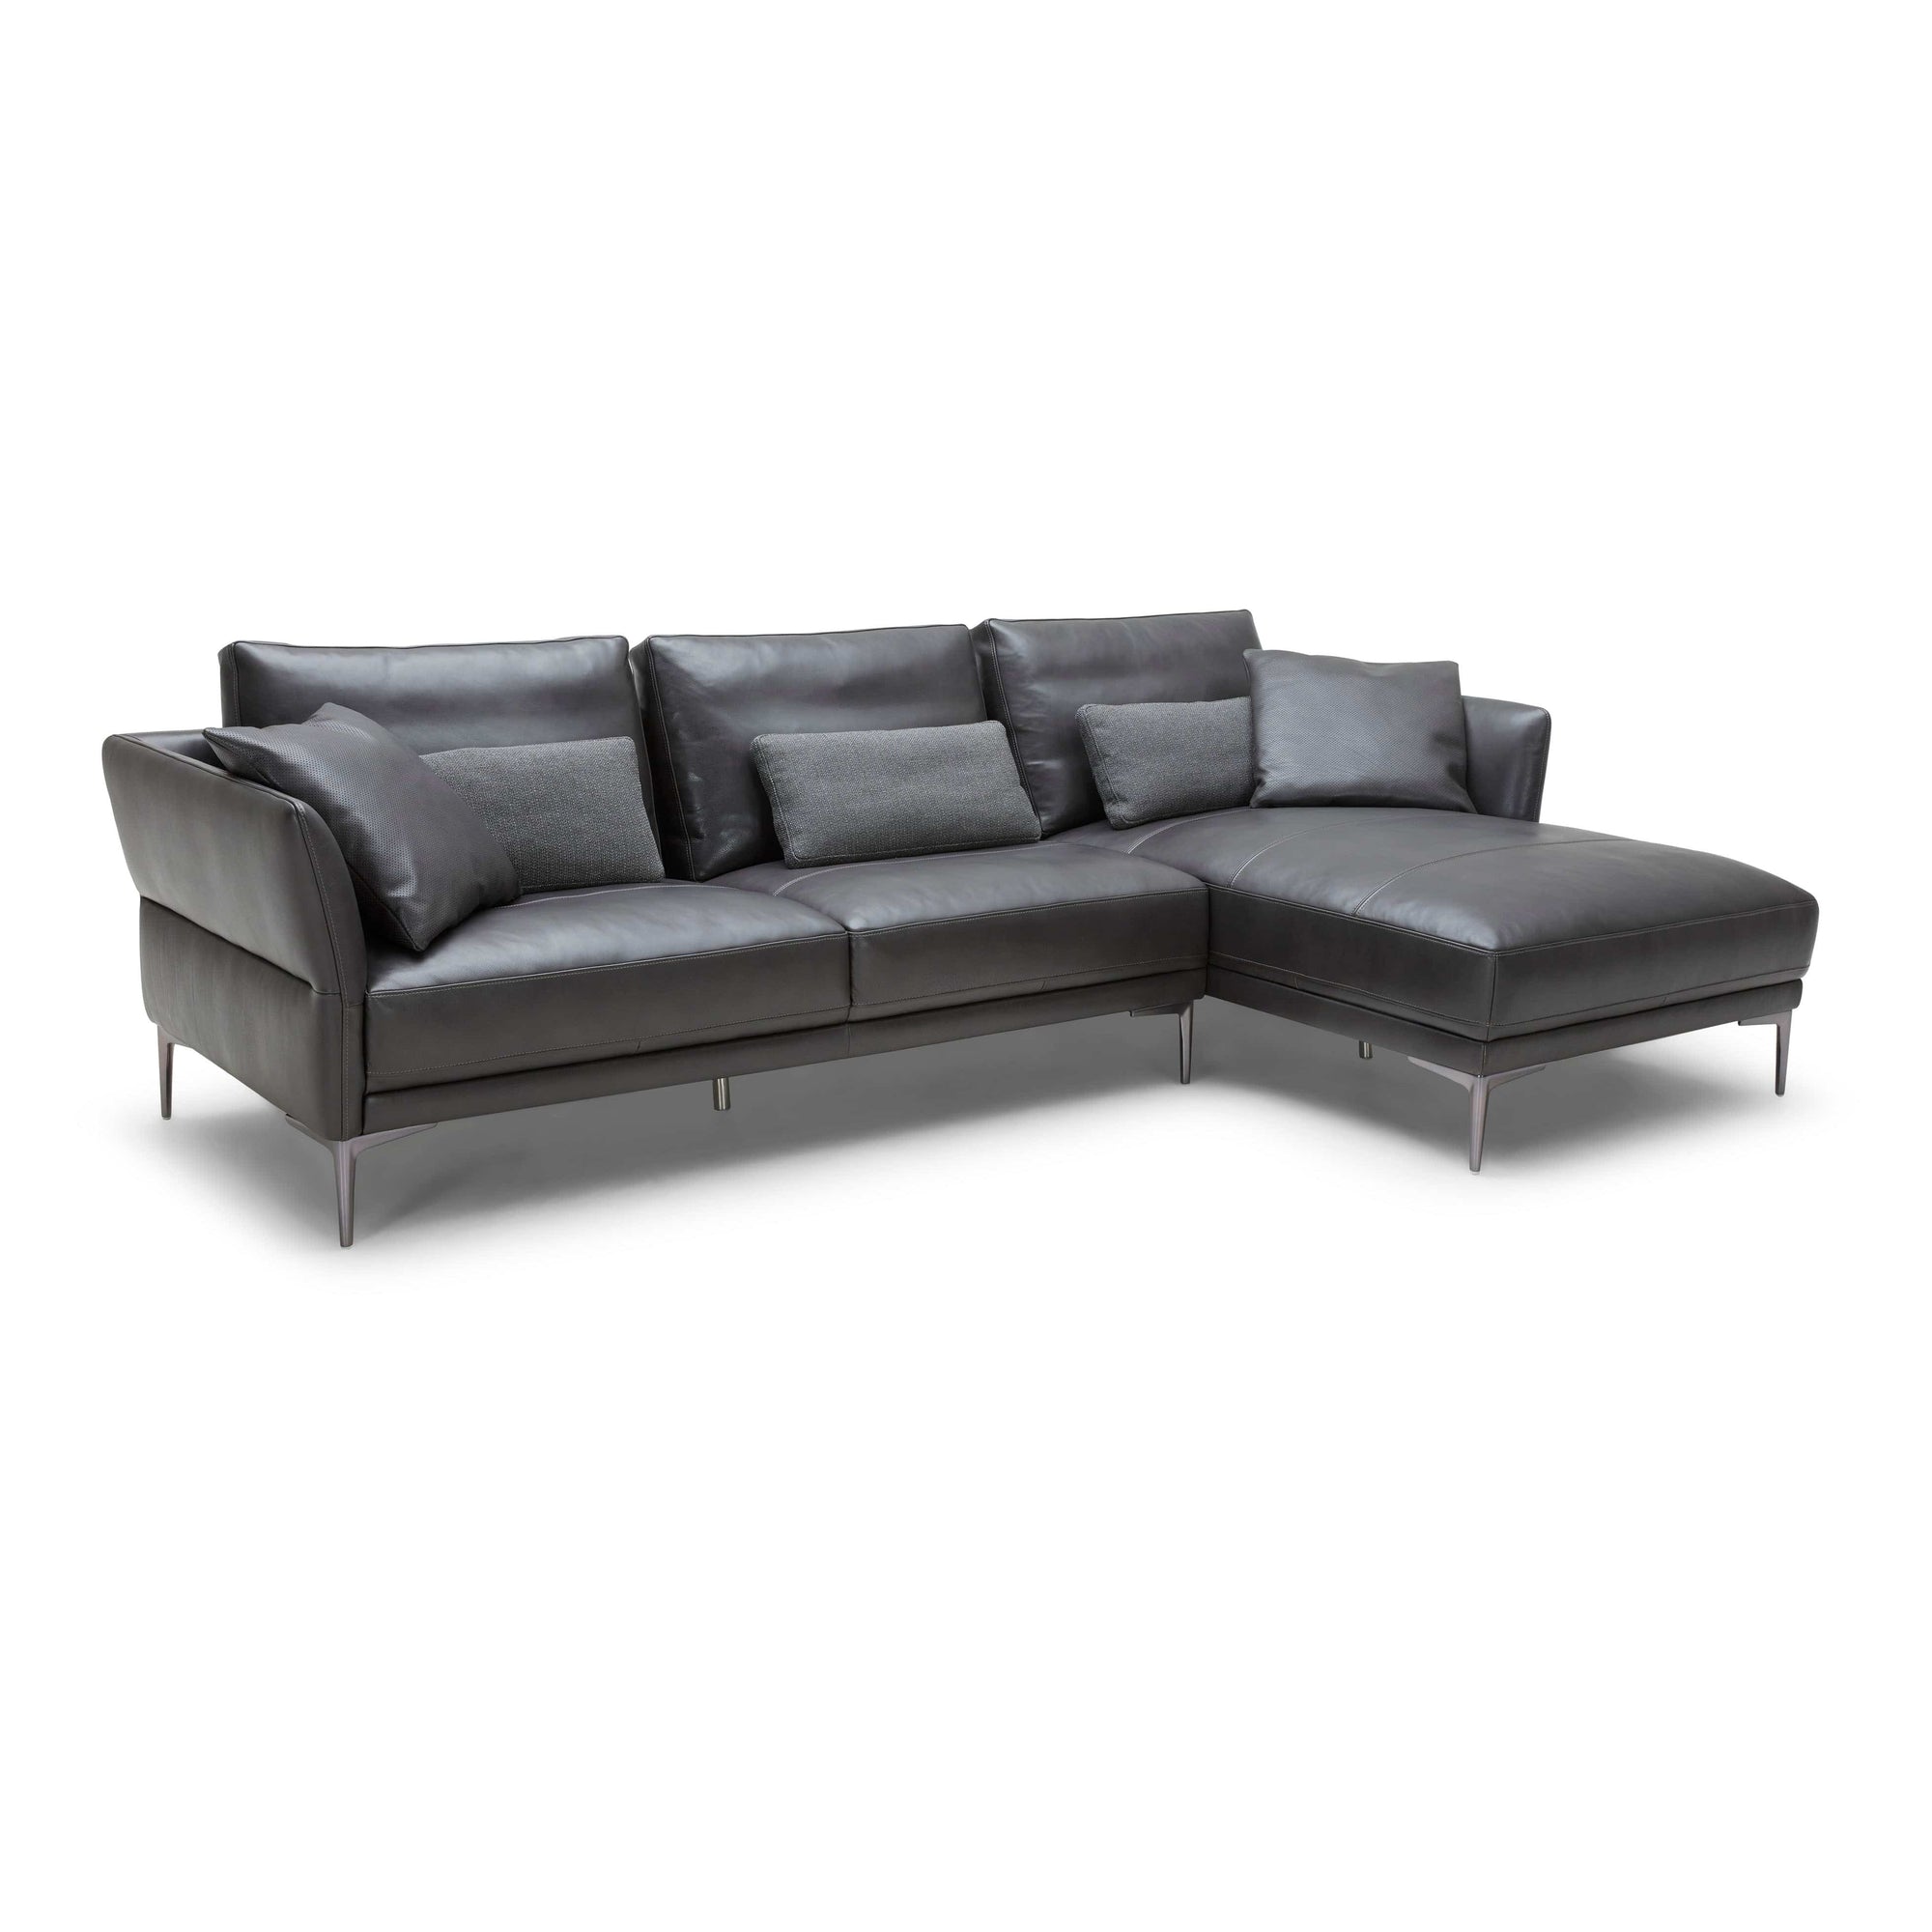 KUKA #5311 Leather Sofa (3+Chaise Lounge) (M Series) (I) picket and rail